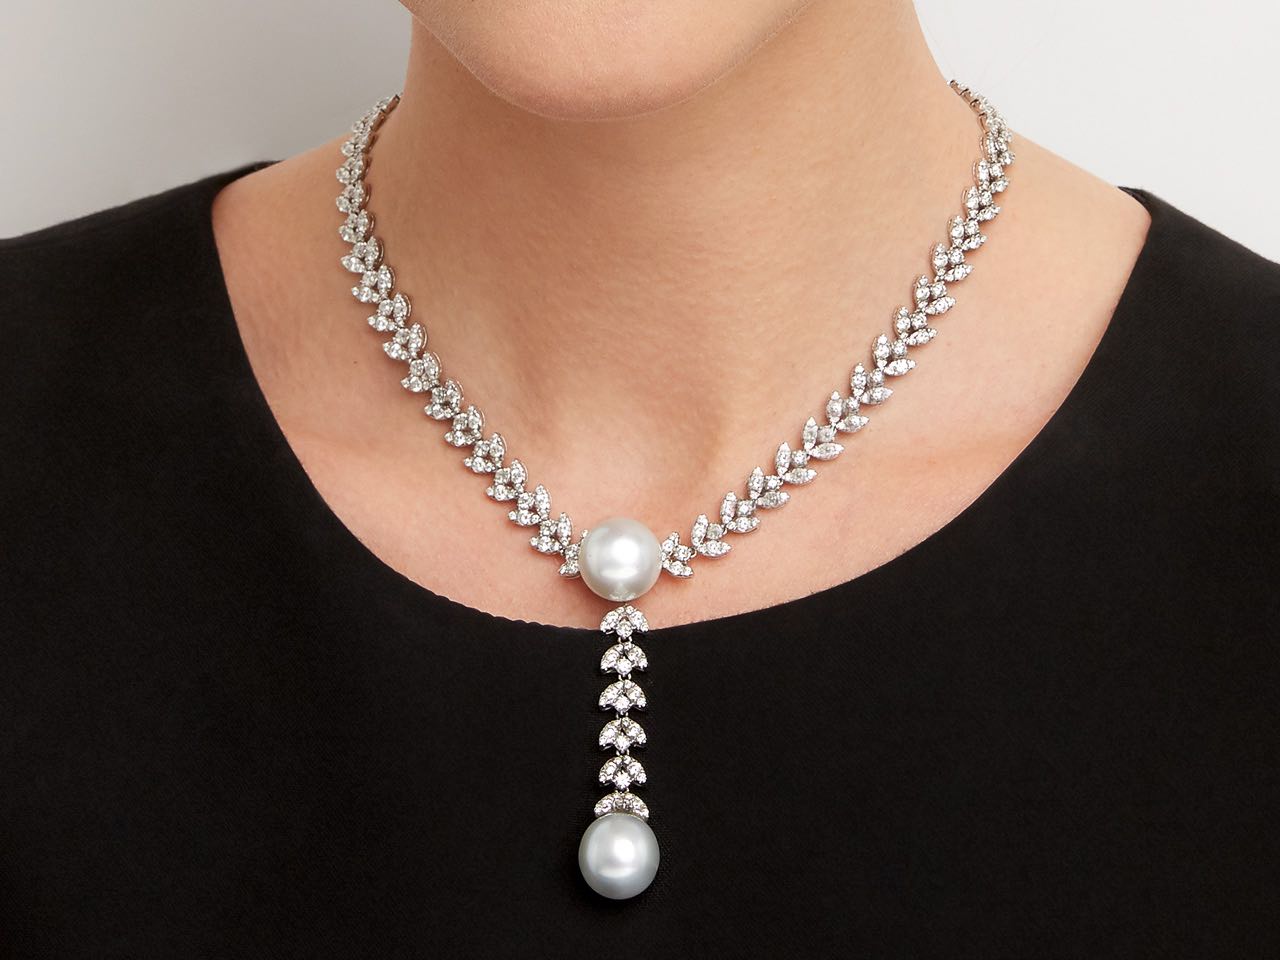 Tiffany South Sea pearl pendant in 18k gold with diamonds.